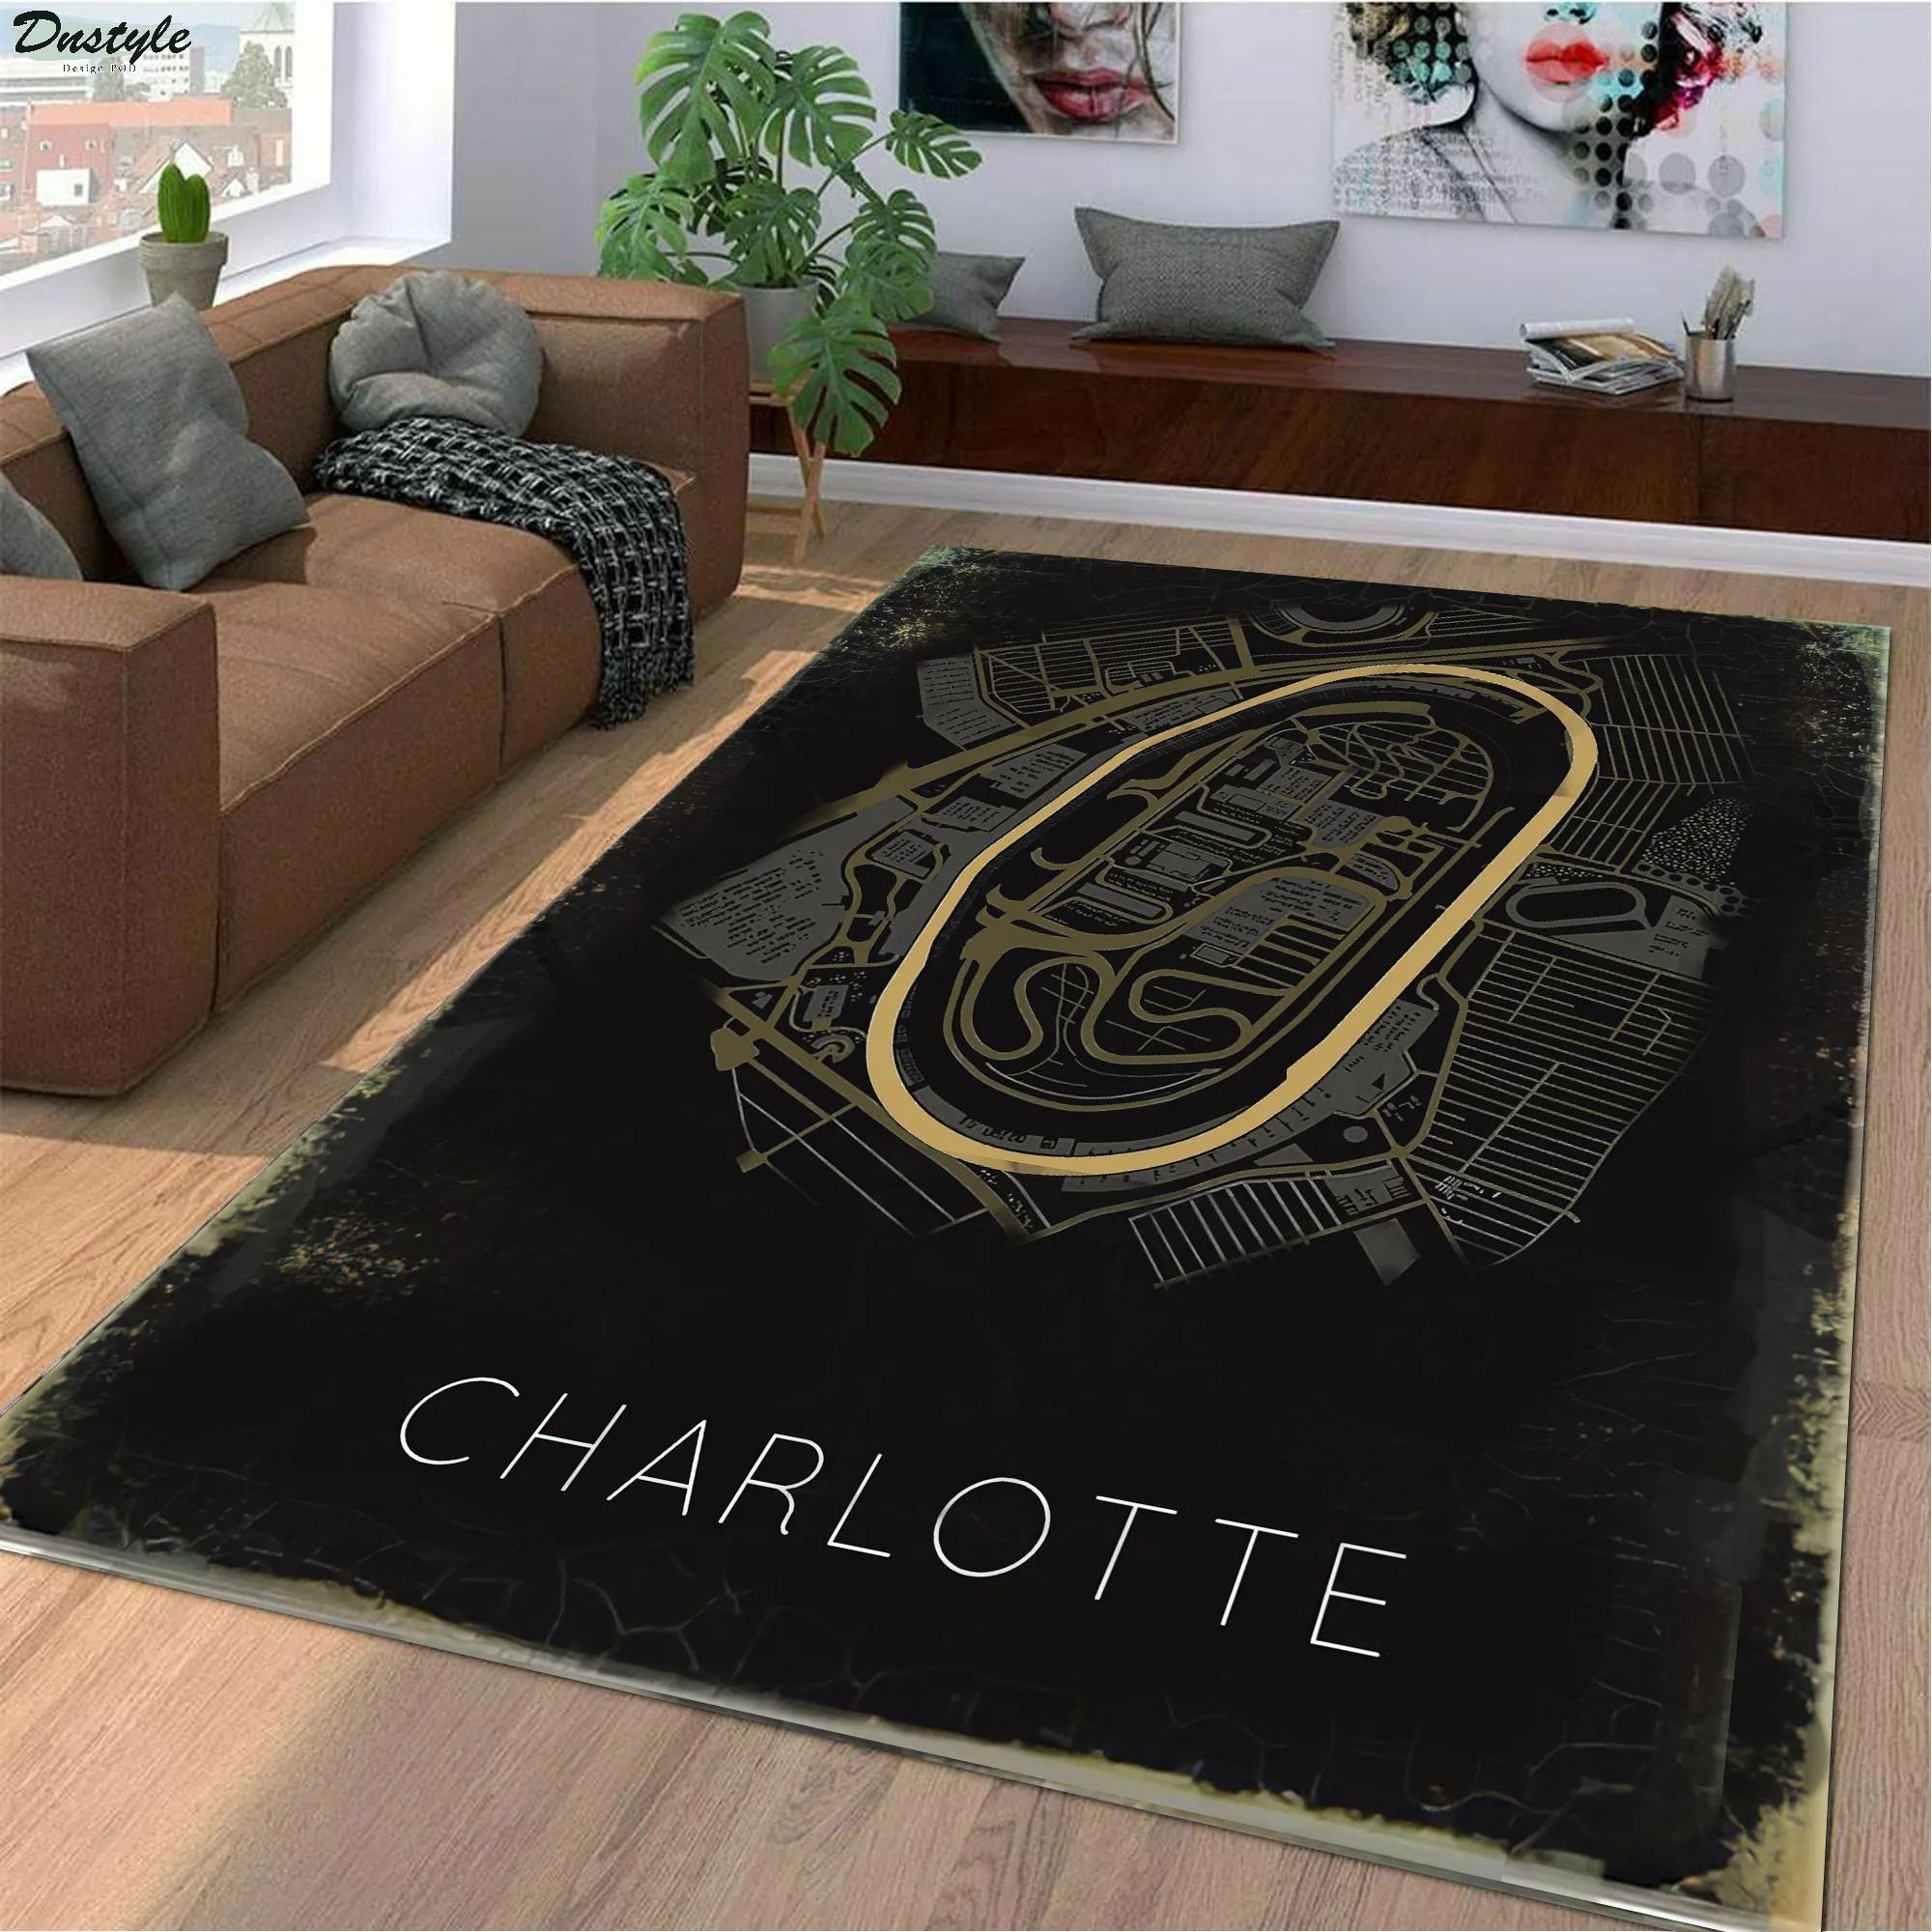 Charlotte f1 track rug